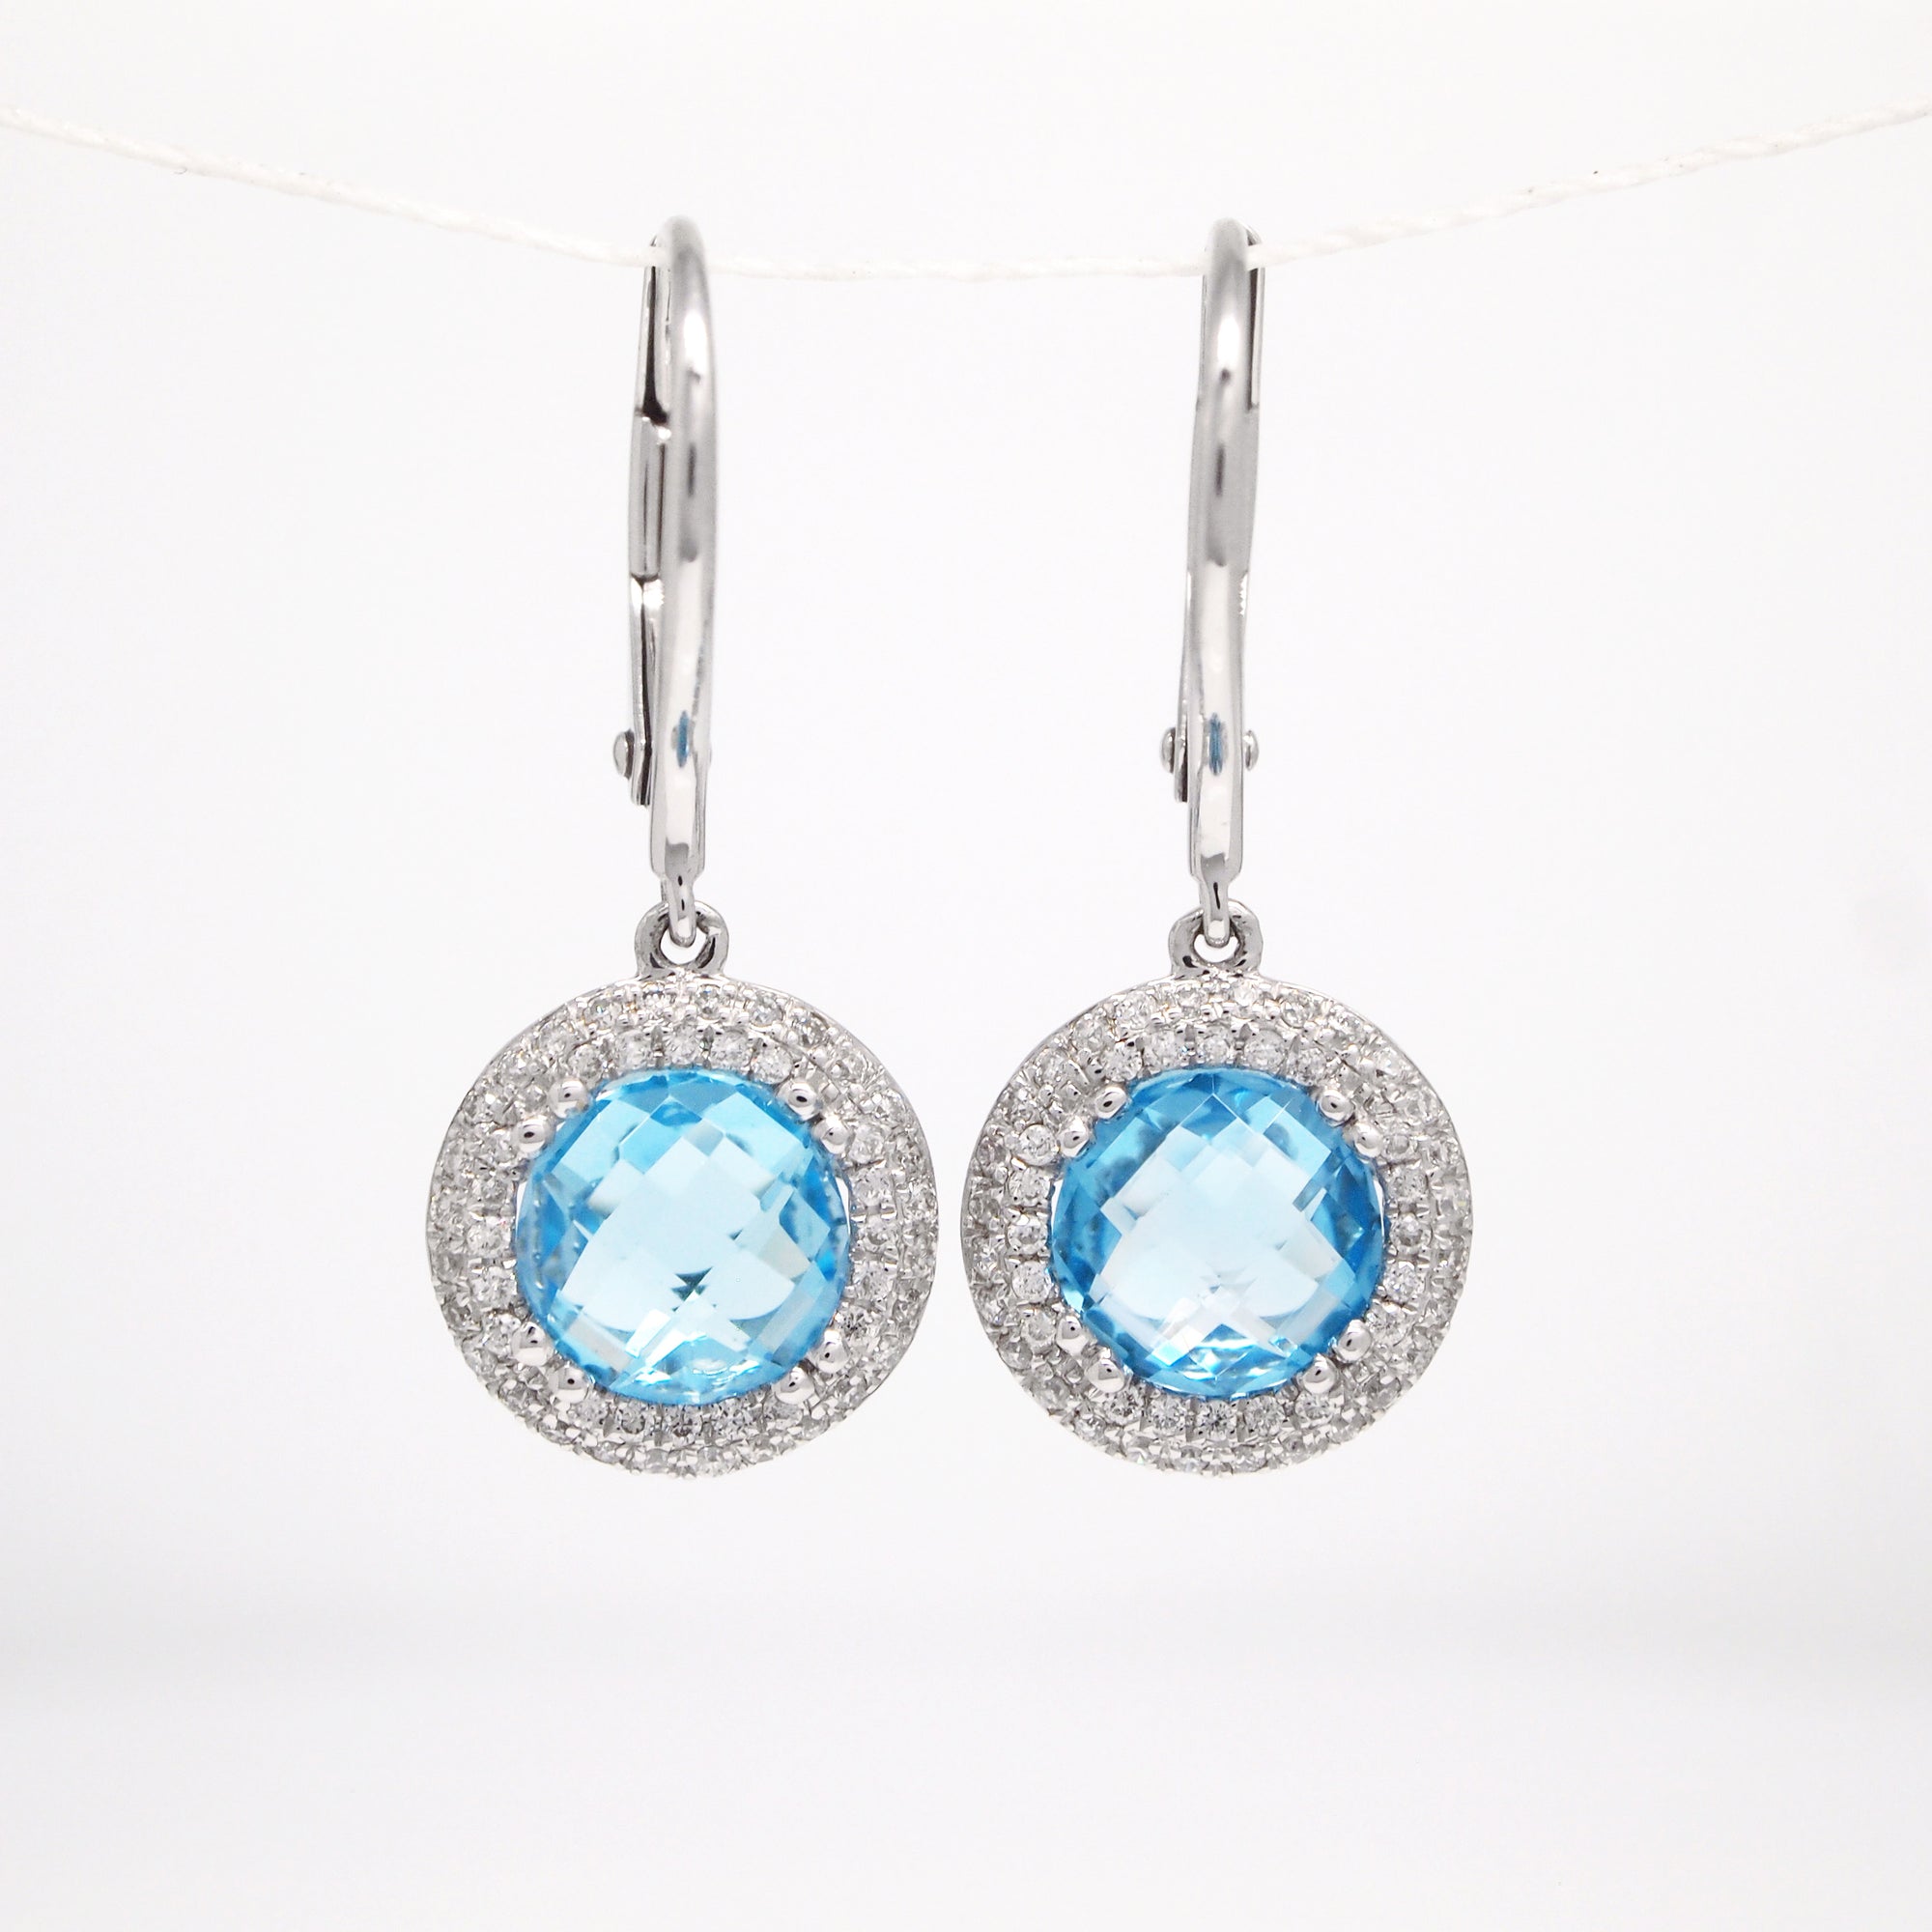 14K White Gold Blue Topaz Earrings With Diamond Halo